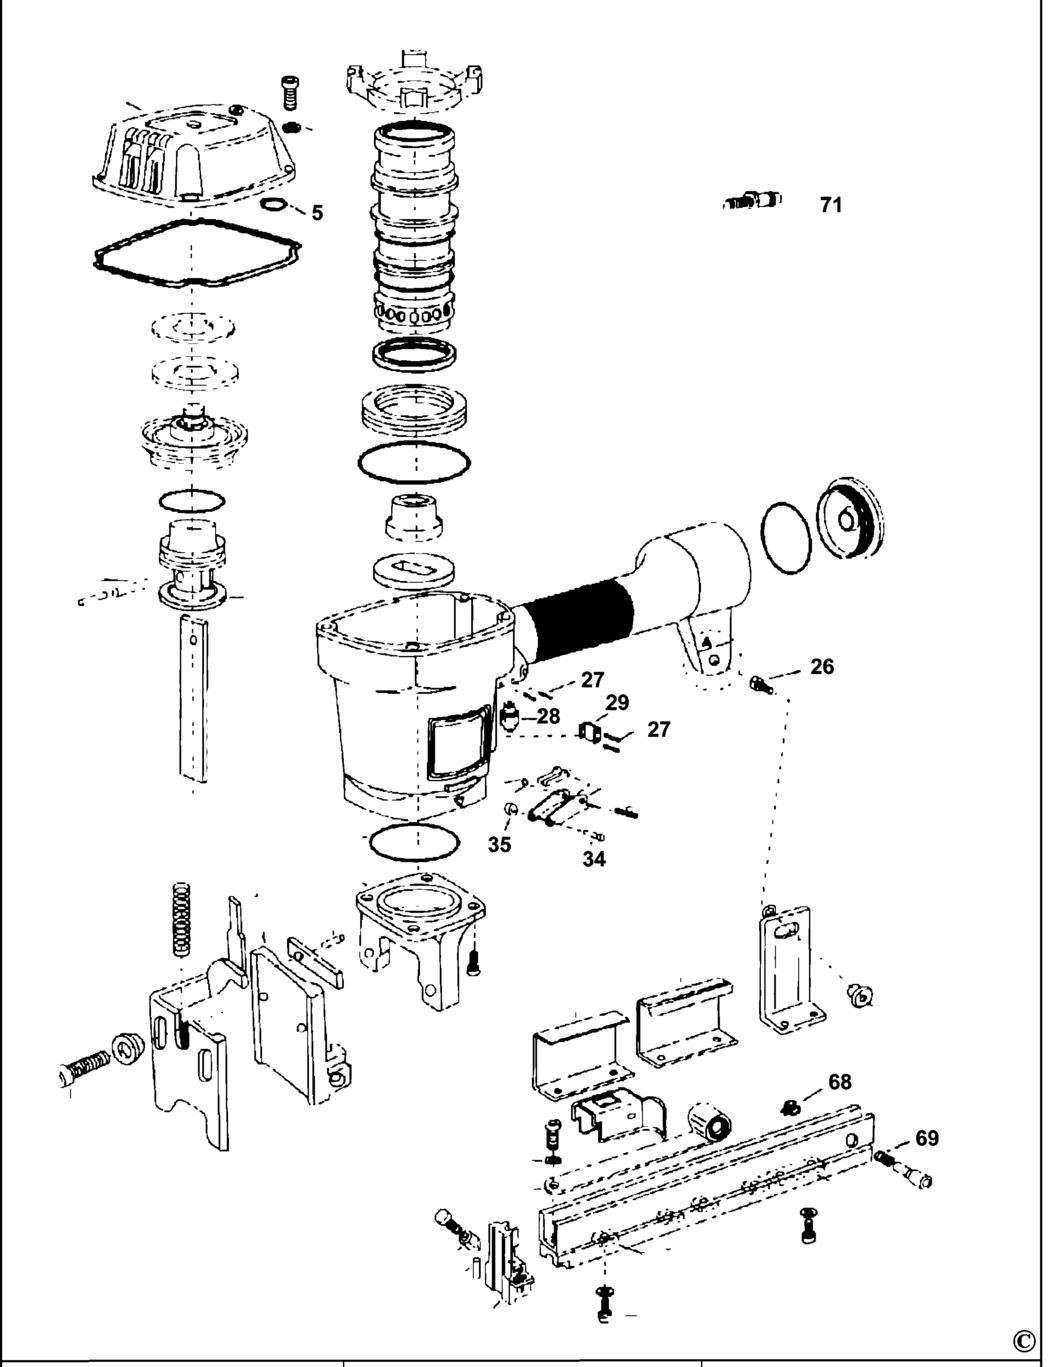 Bostitch EPAL SM Type REV 0 Nailer Spare Parts